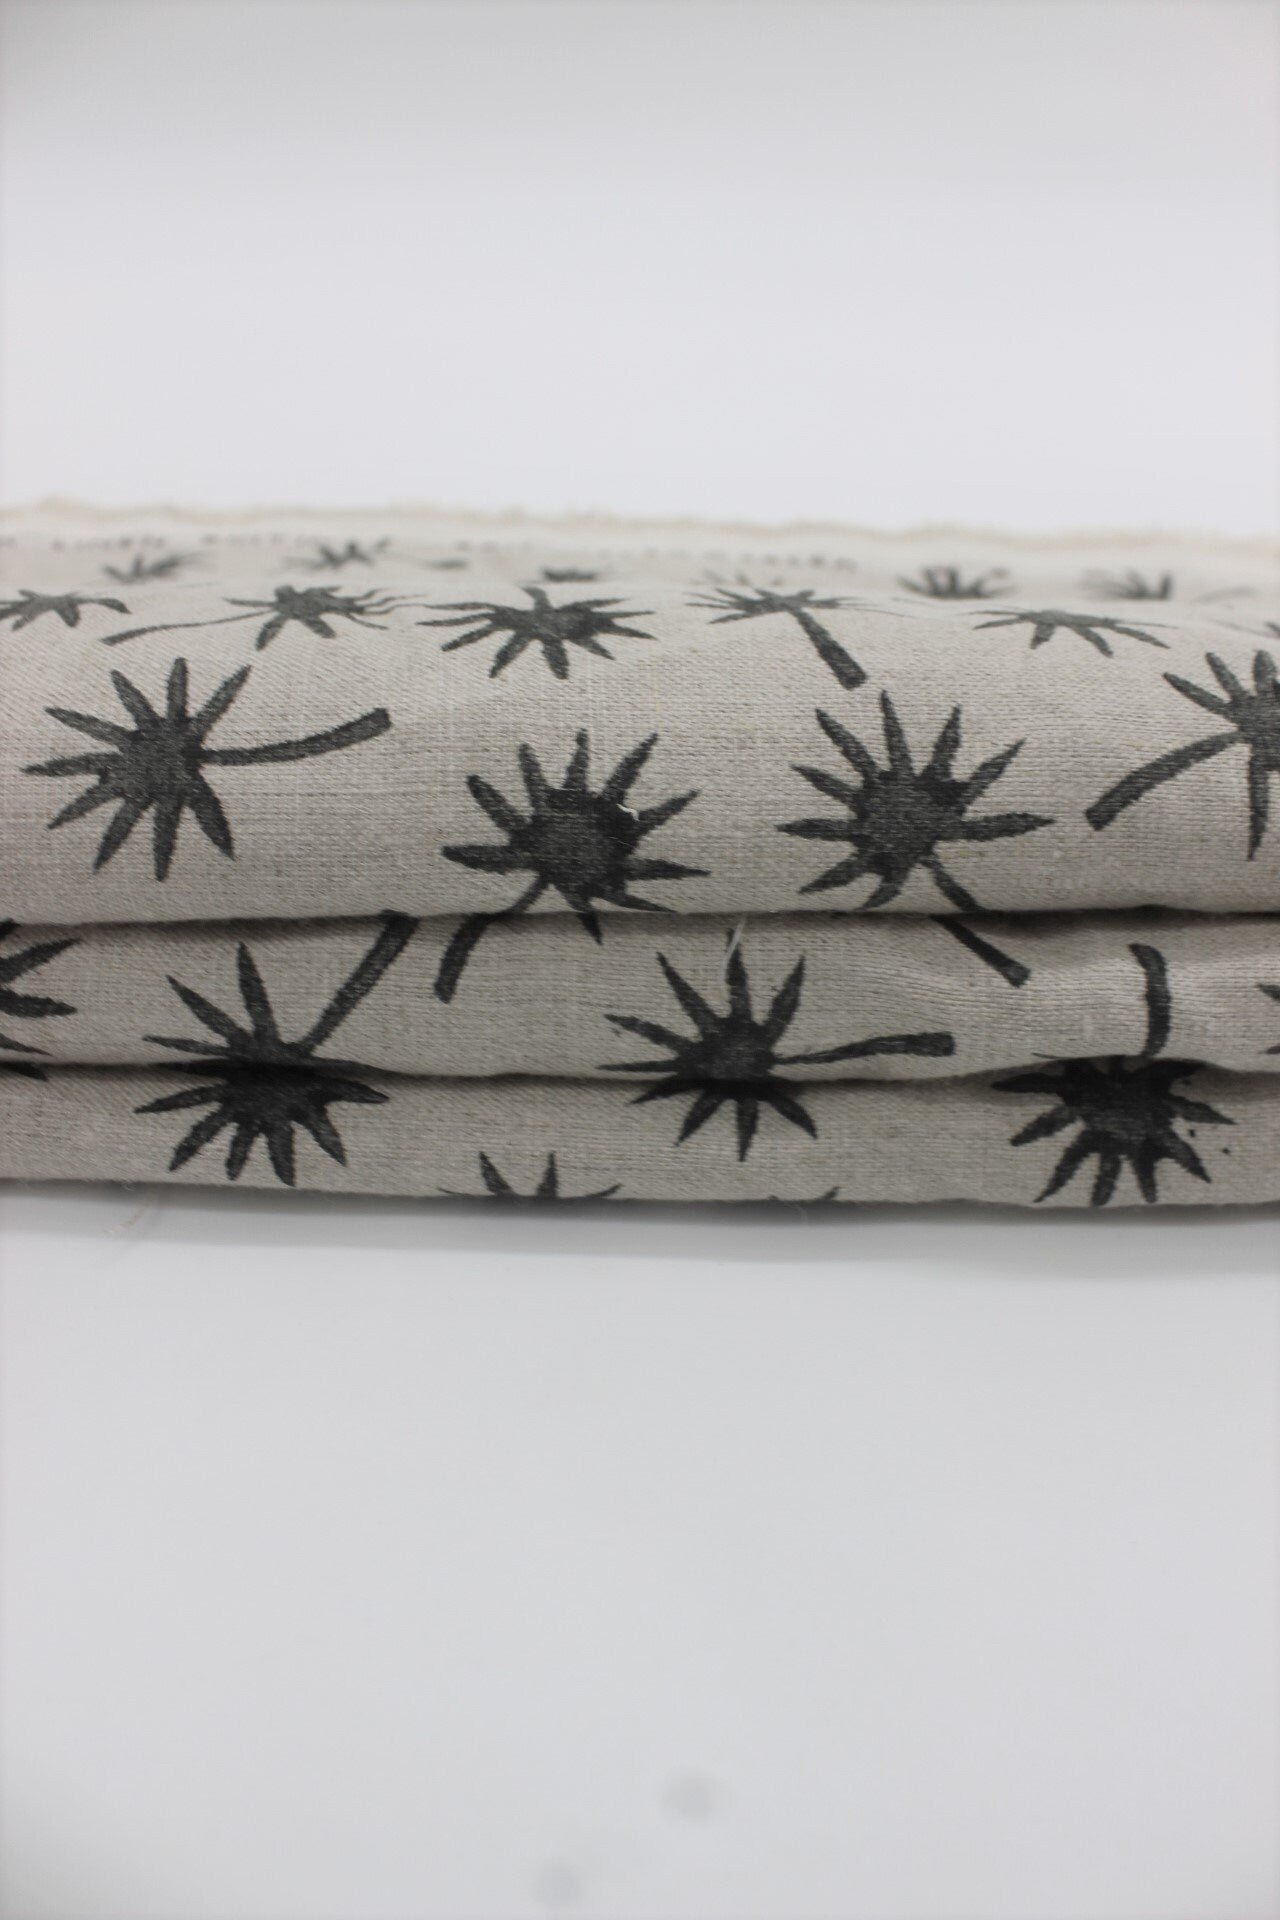 Pure Linen Fabric, Hand Block Print, Modern fabric, hand stamped, Organic Linen, Indian Fabric, home Decor -Coconut black